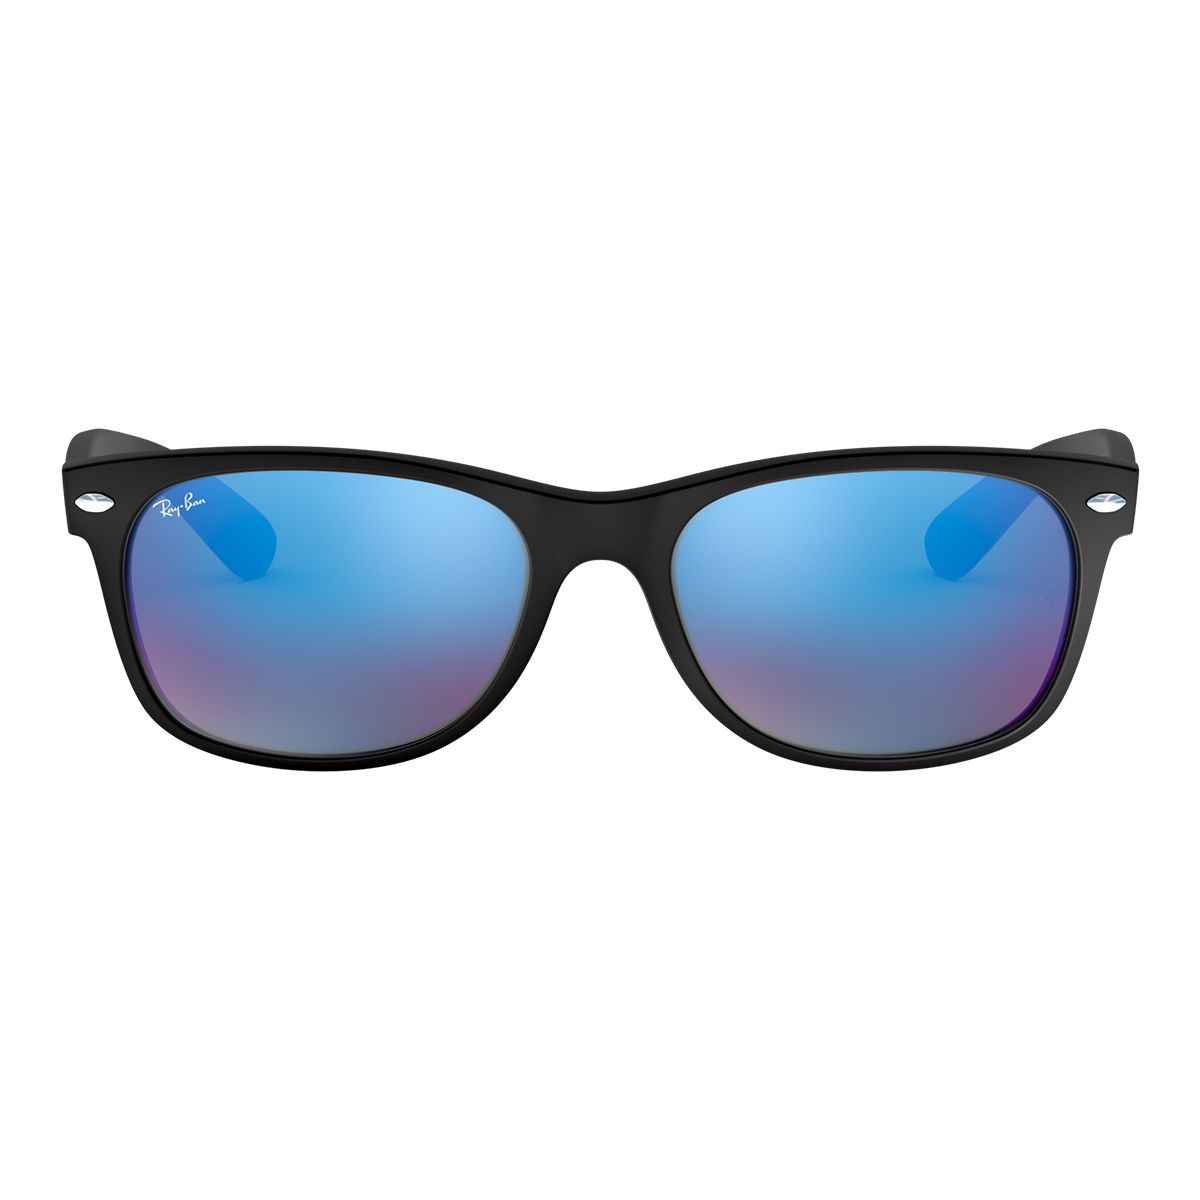 Image of Ray-Ban New Wayfarer Rubber Sunglasses